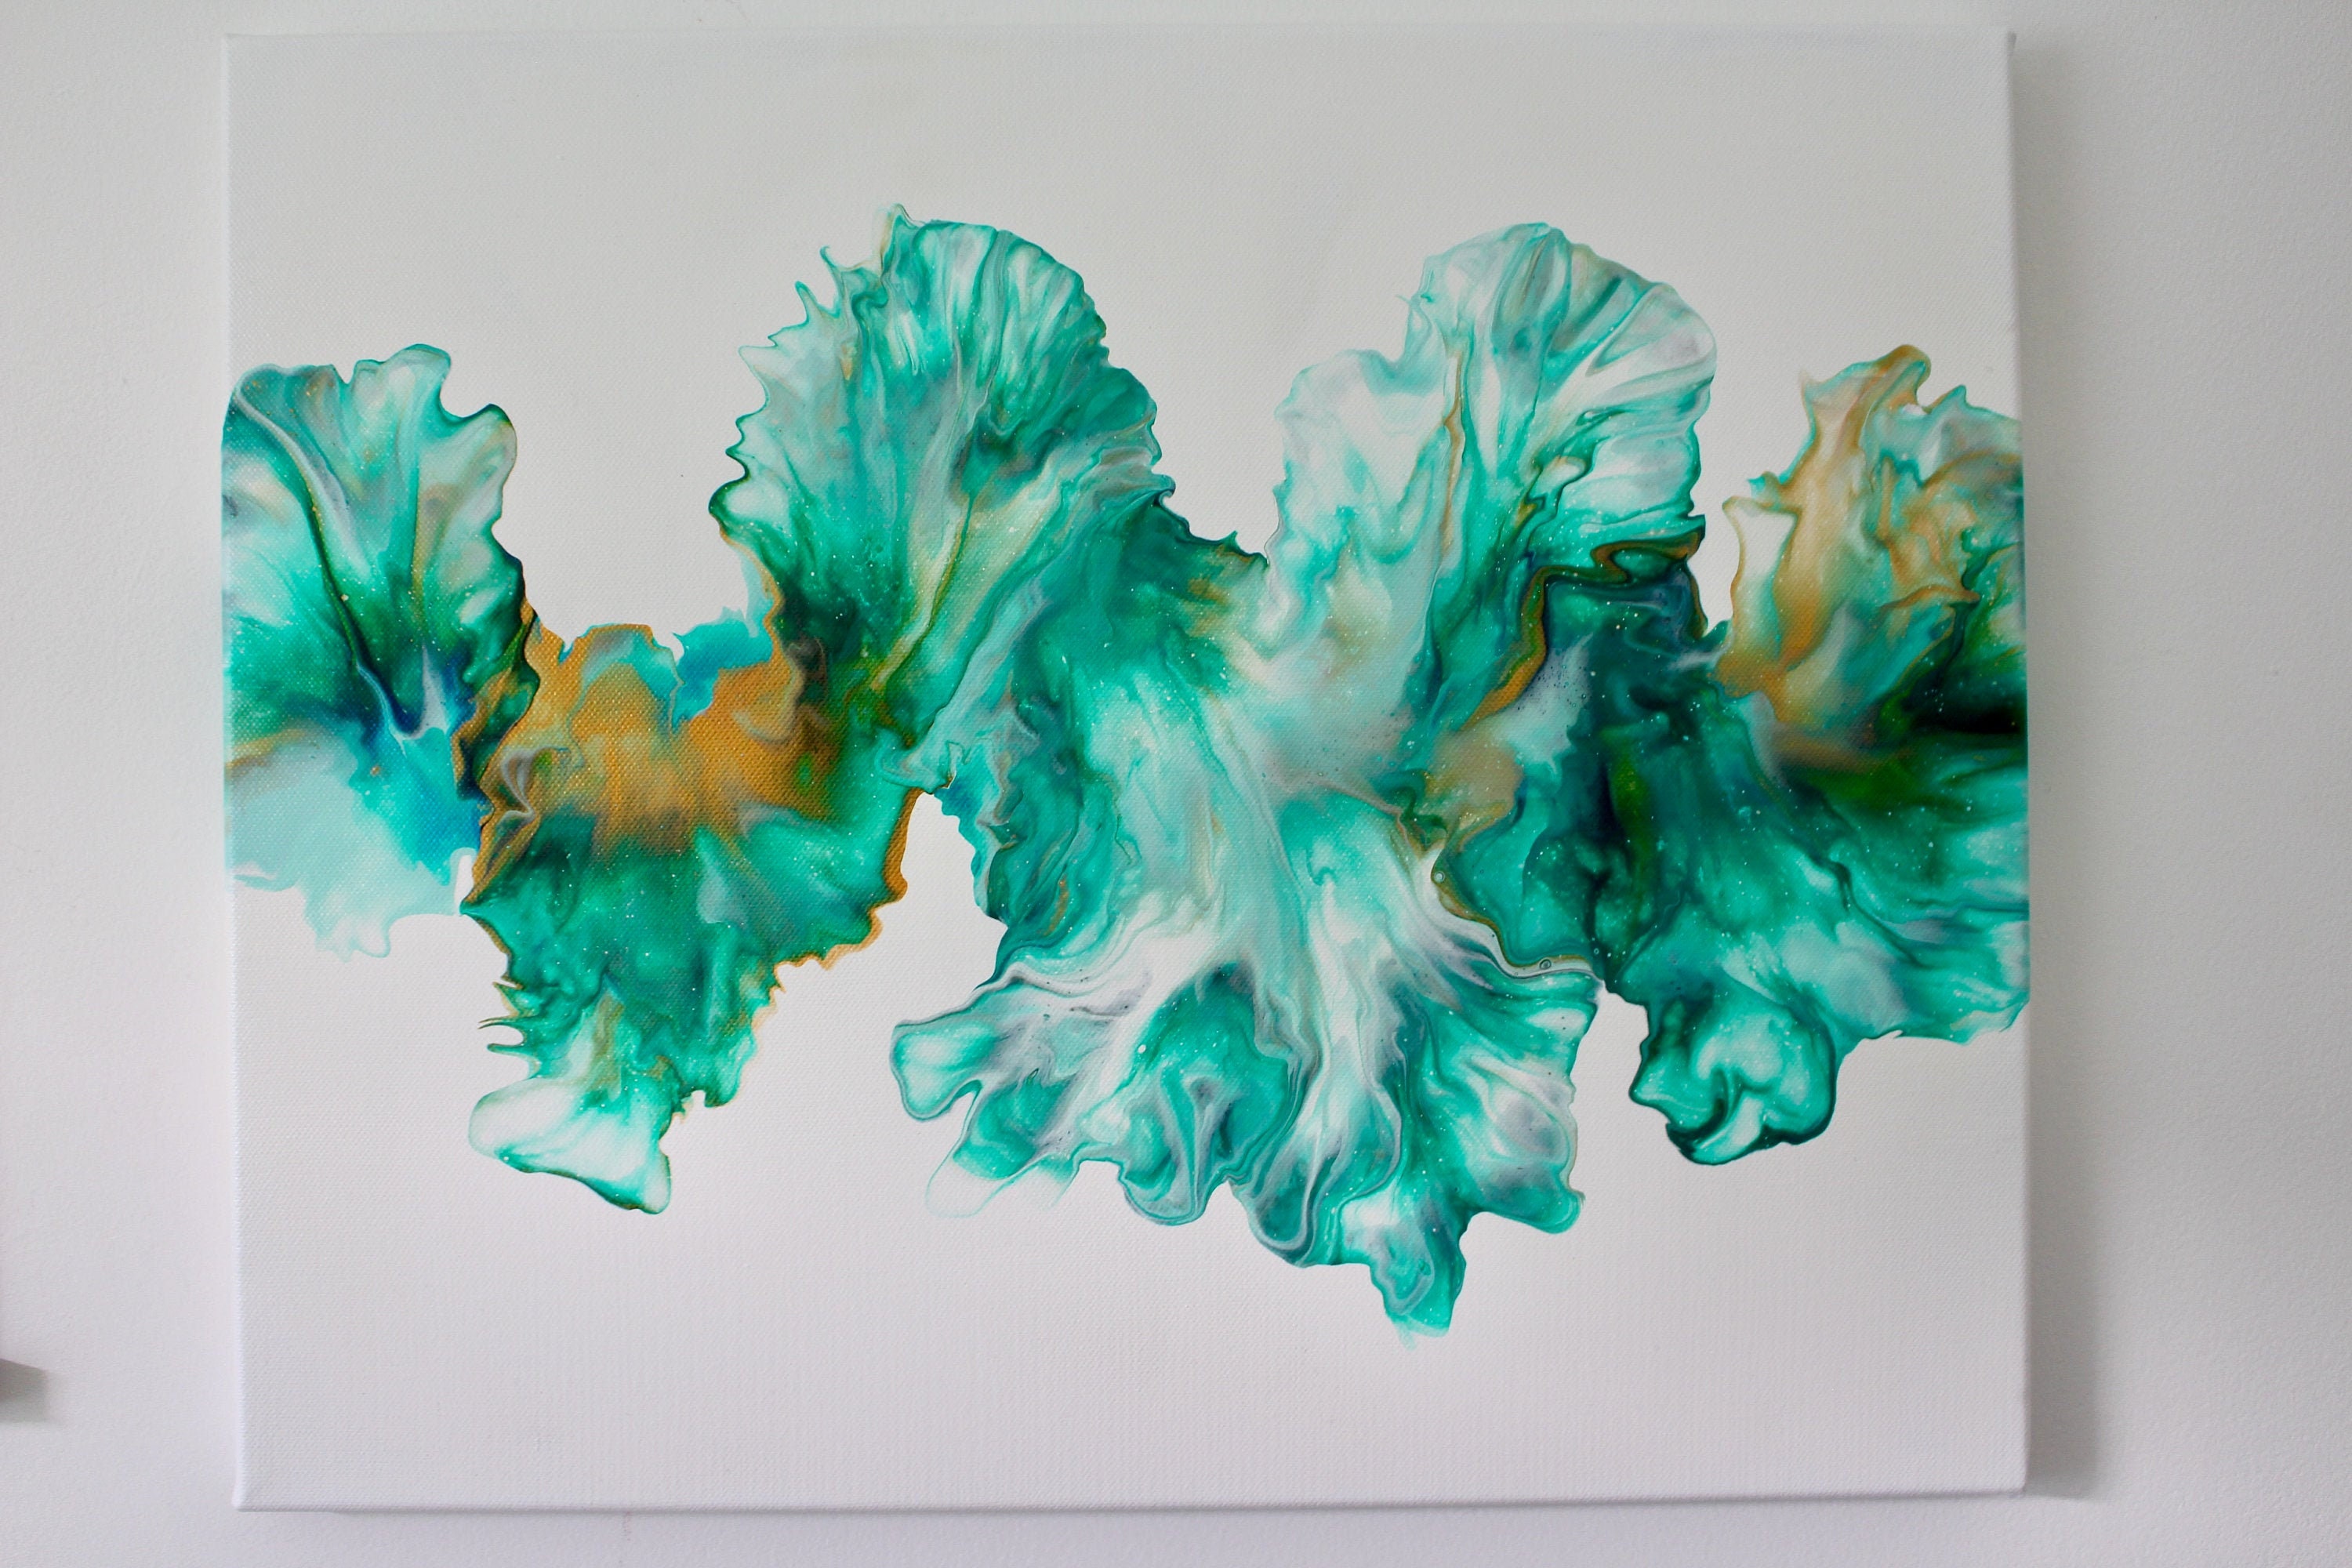 Coral Reef - Dutch Pour Painting/Turquoise Green & Gold 46x38cm Cotton Canvas